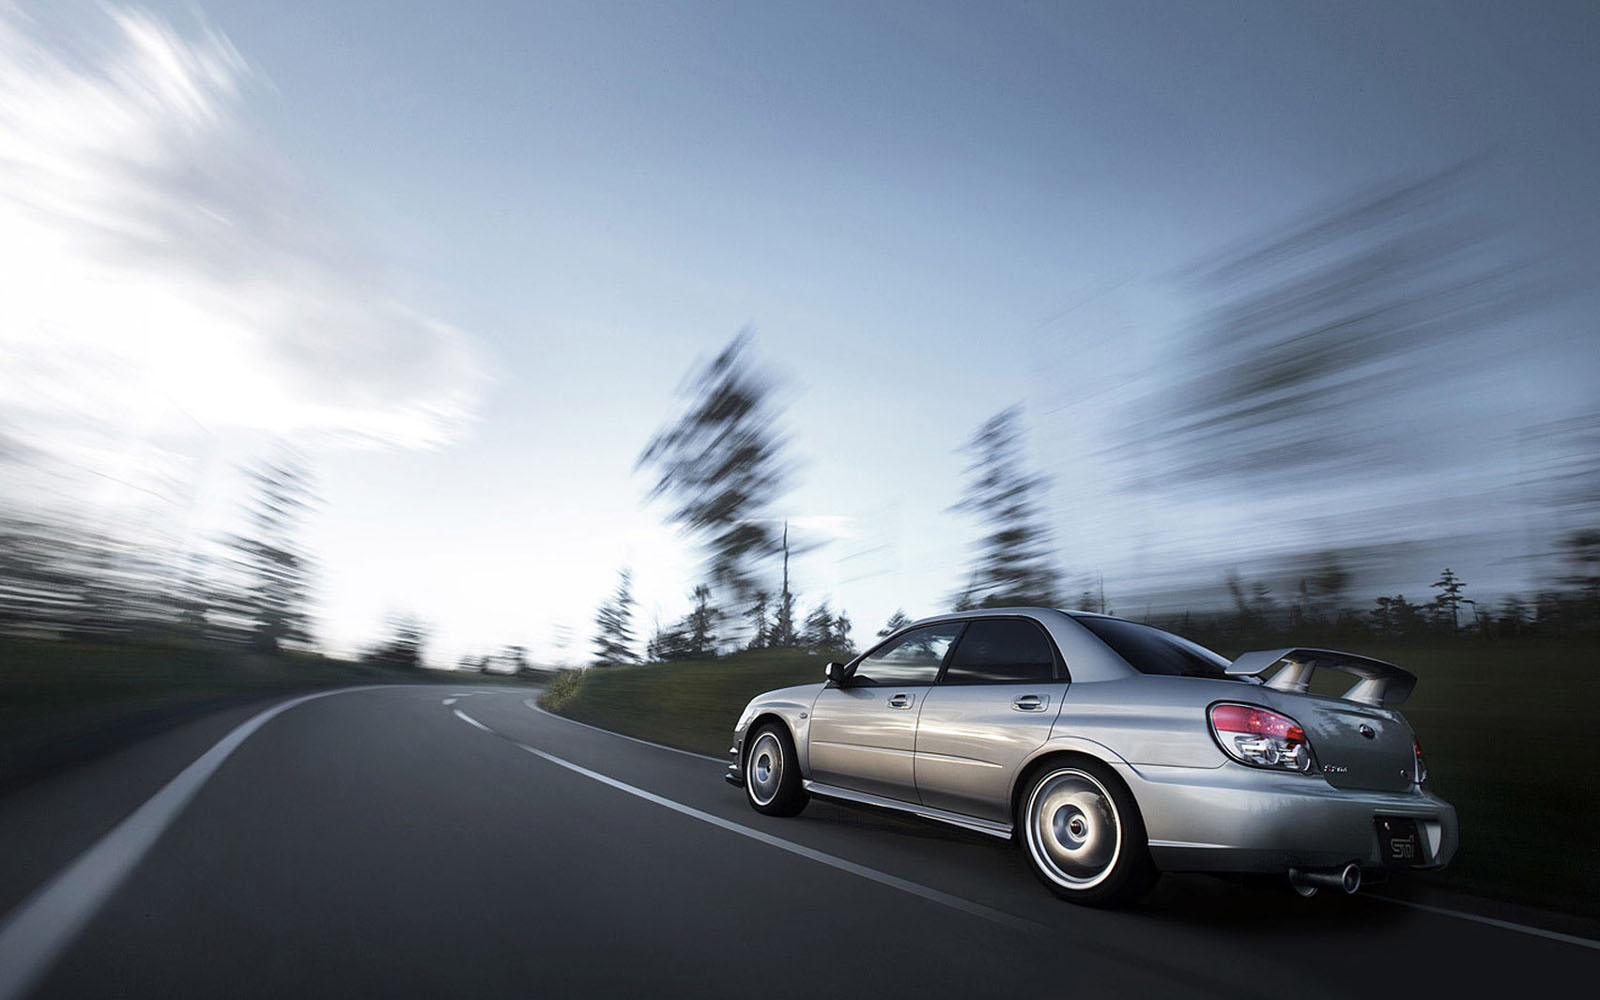 Subaru Impreza Photo For Desktop Background Image